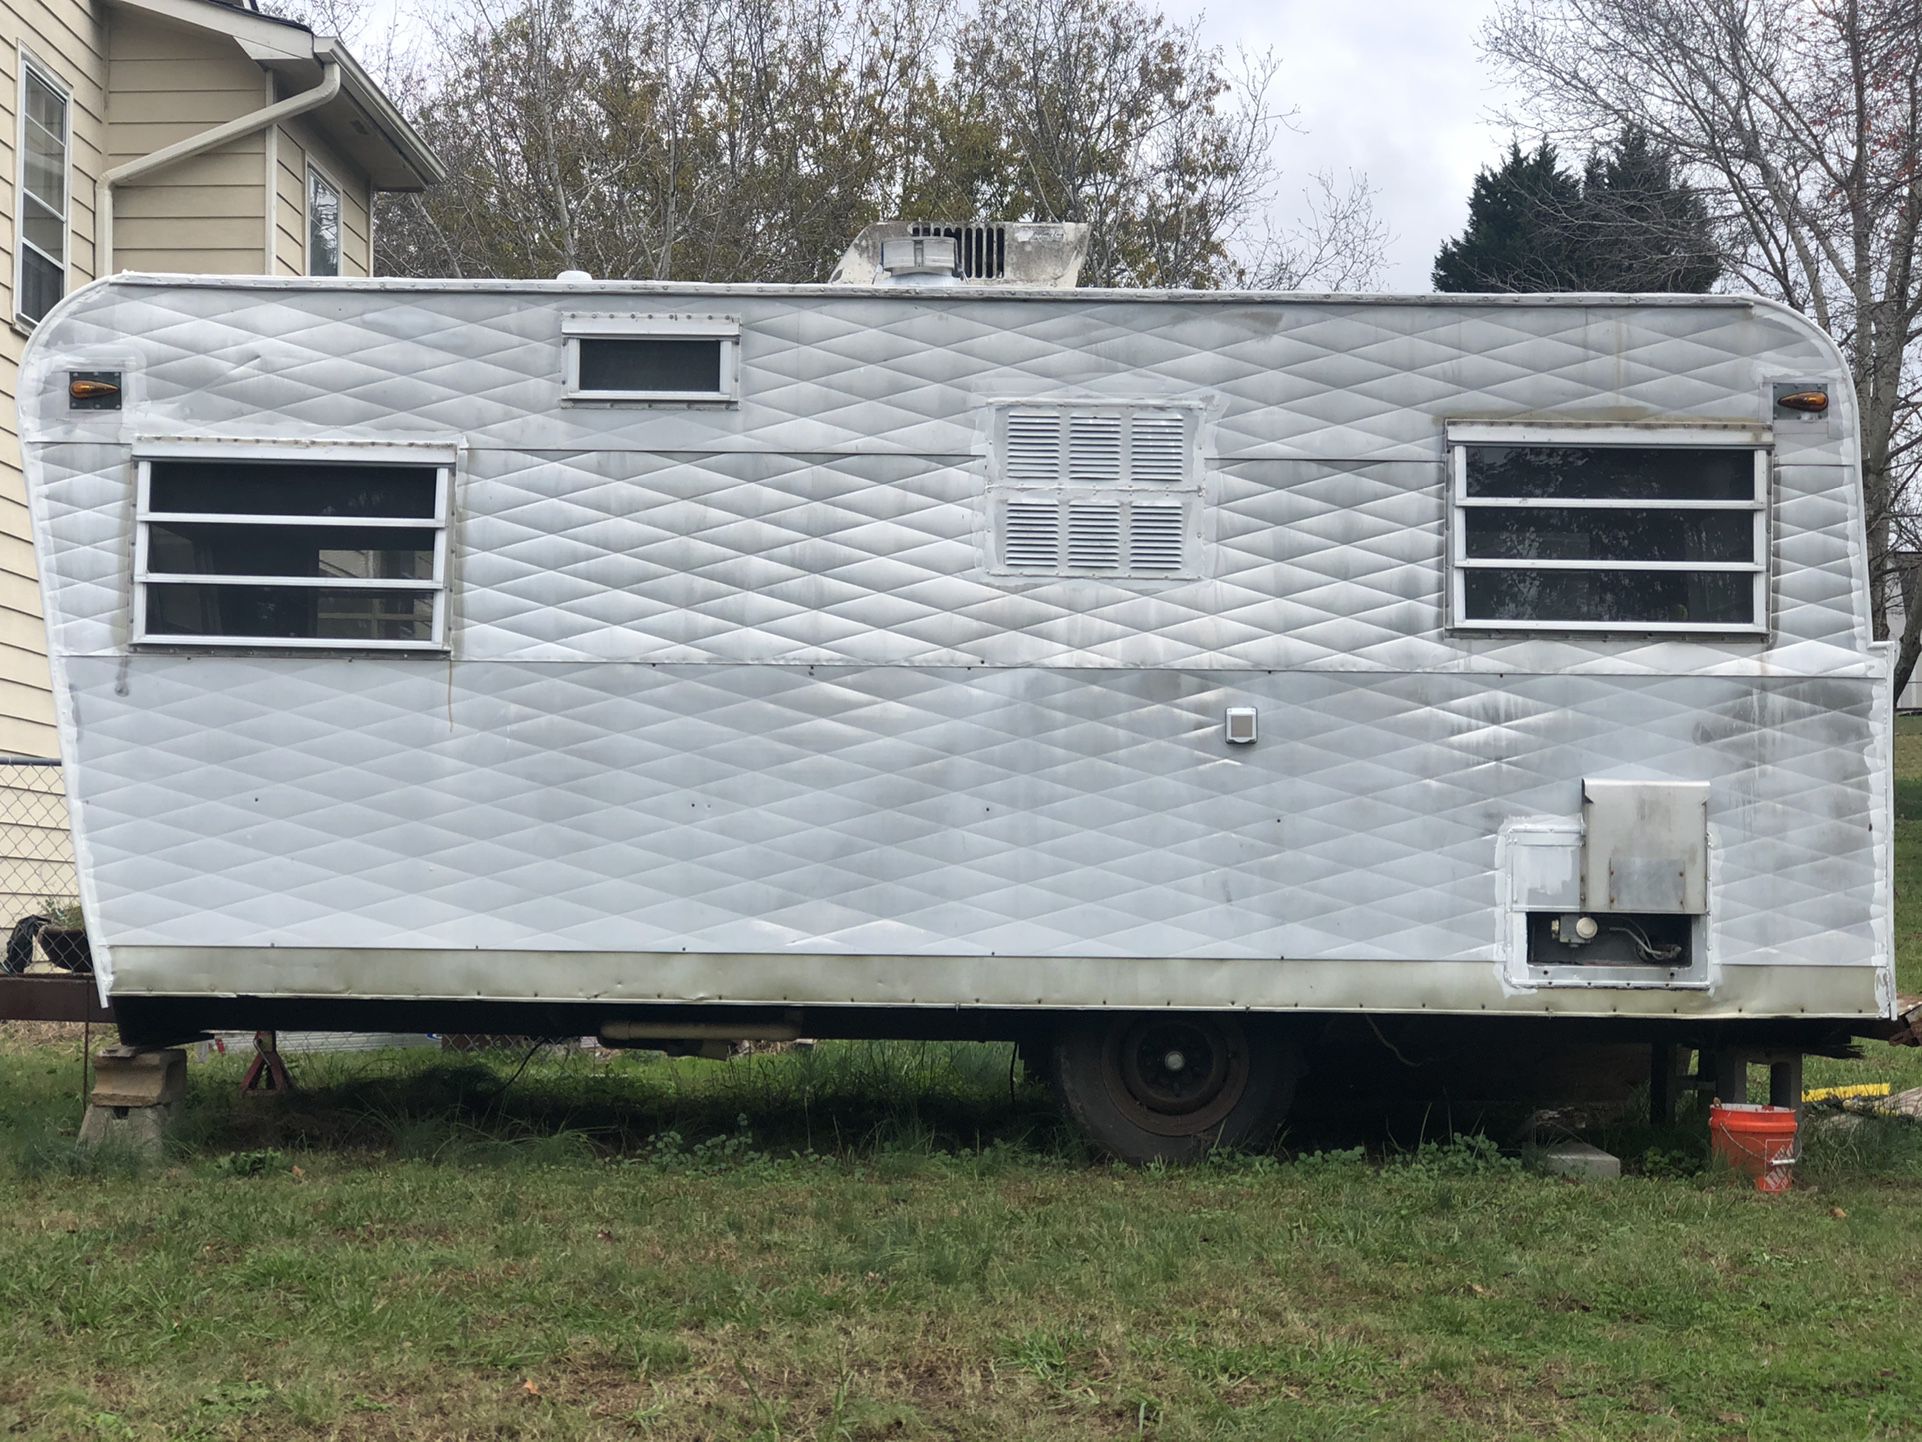 Vintage travel trailer, 17’ L x 7.5’ W